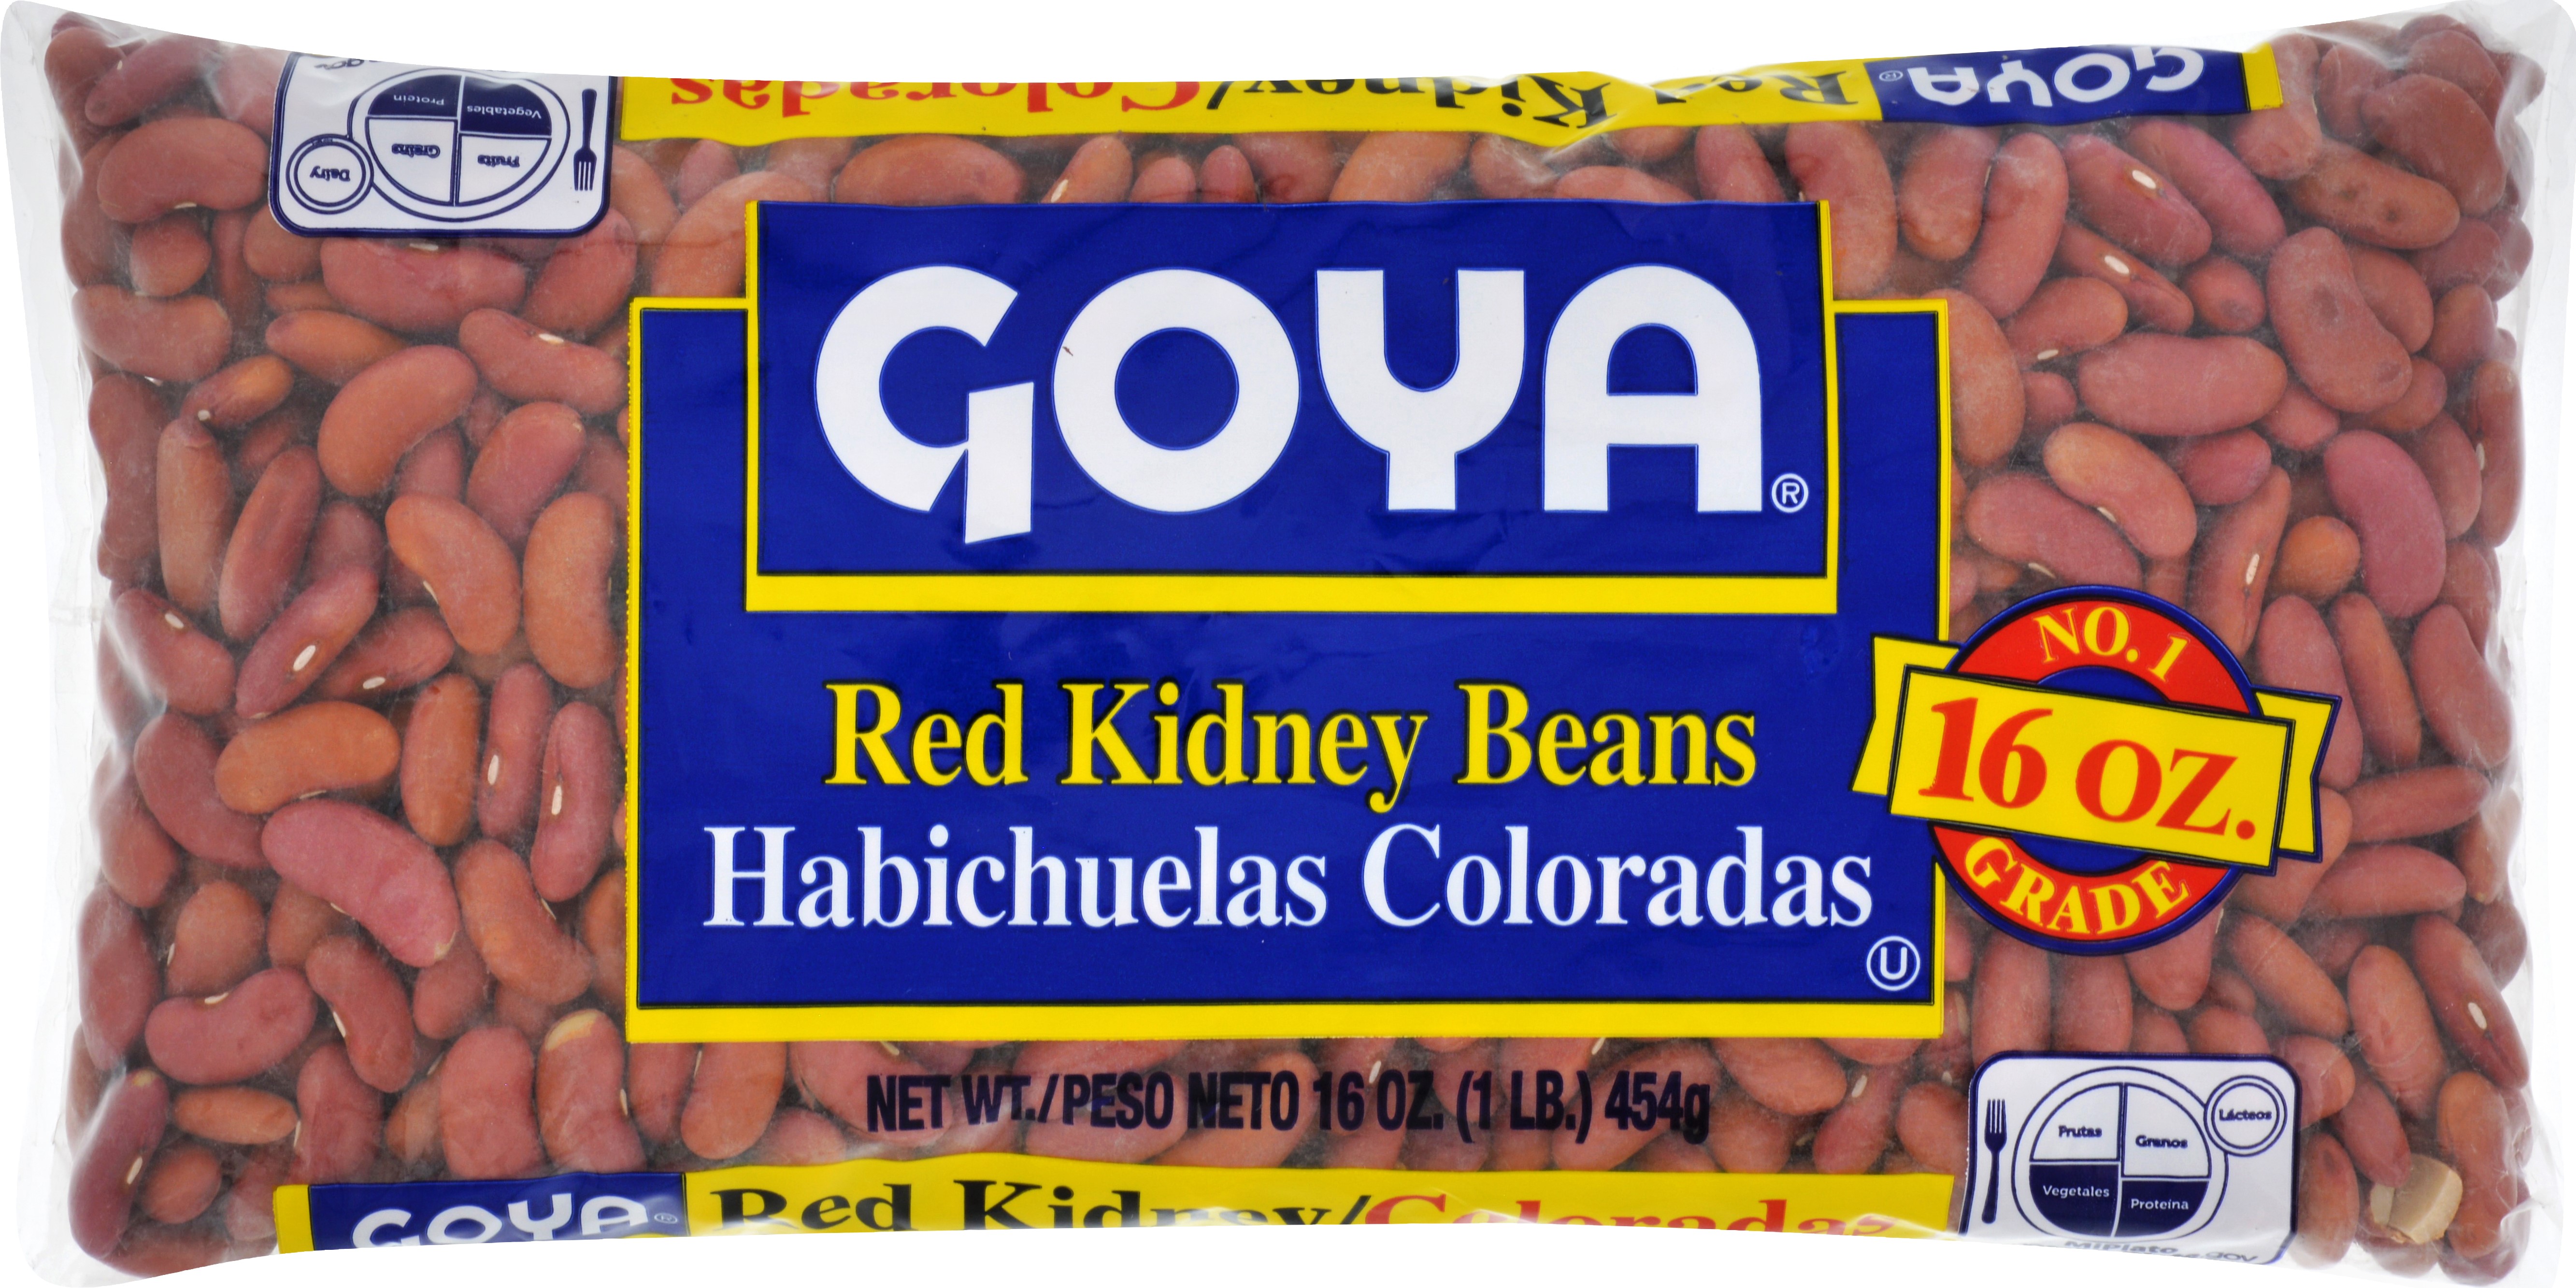 Goya Red Kidney Beans, 16oz - image 1 of 2